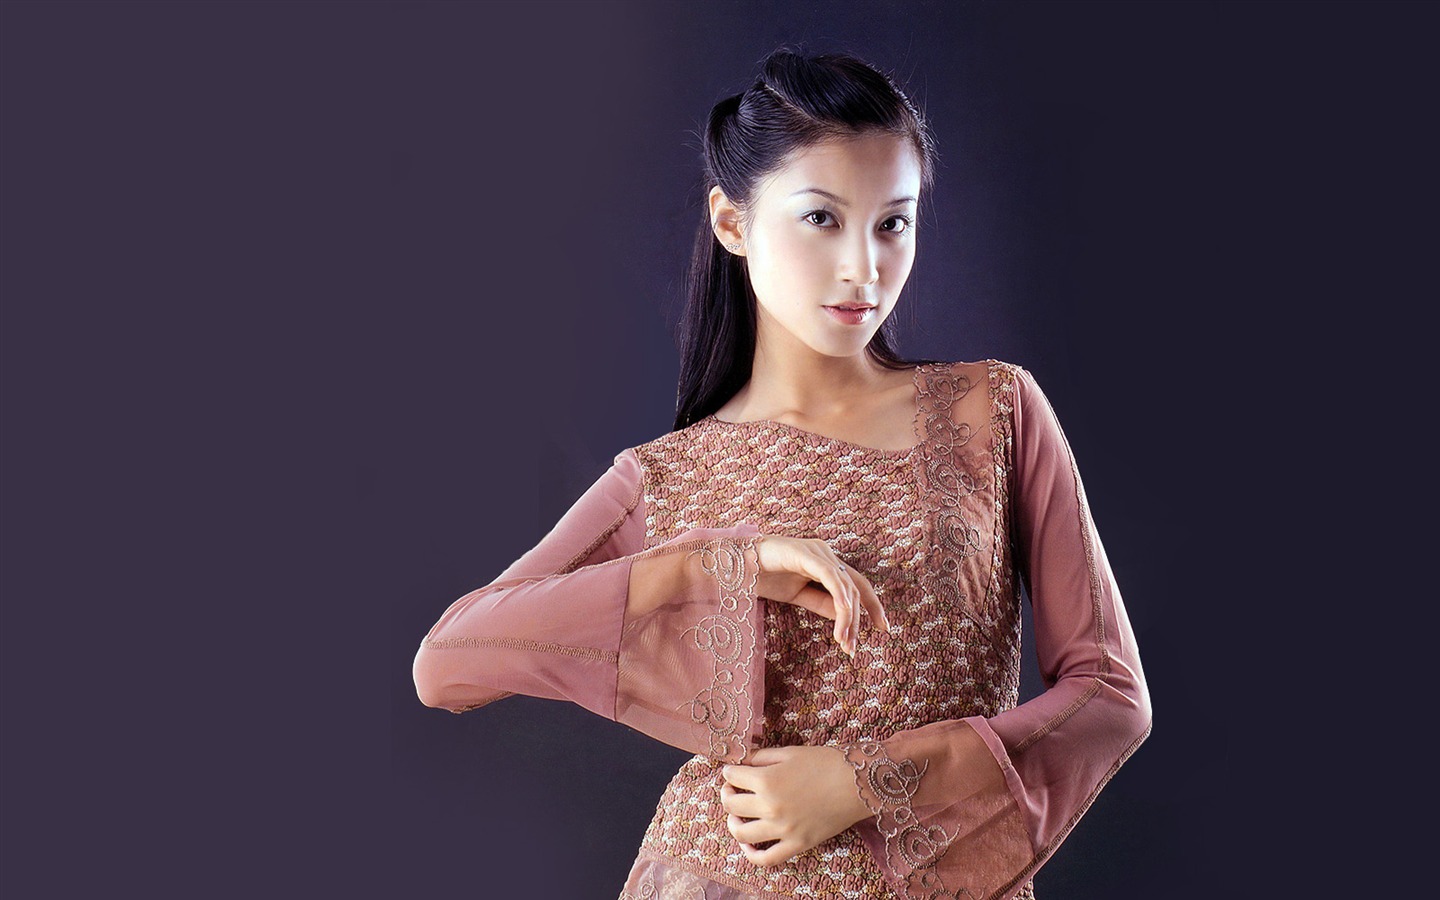 Oriental Beauty Fashion Show #1 - 1440x900